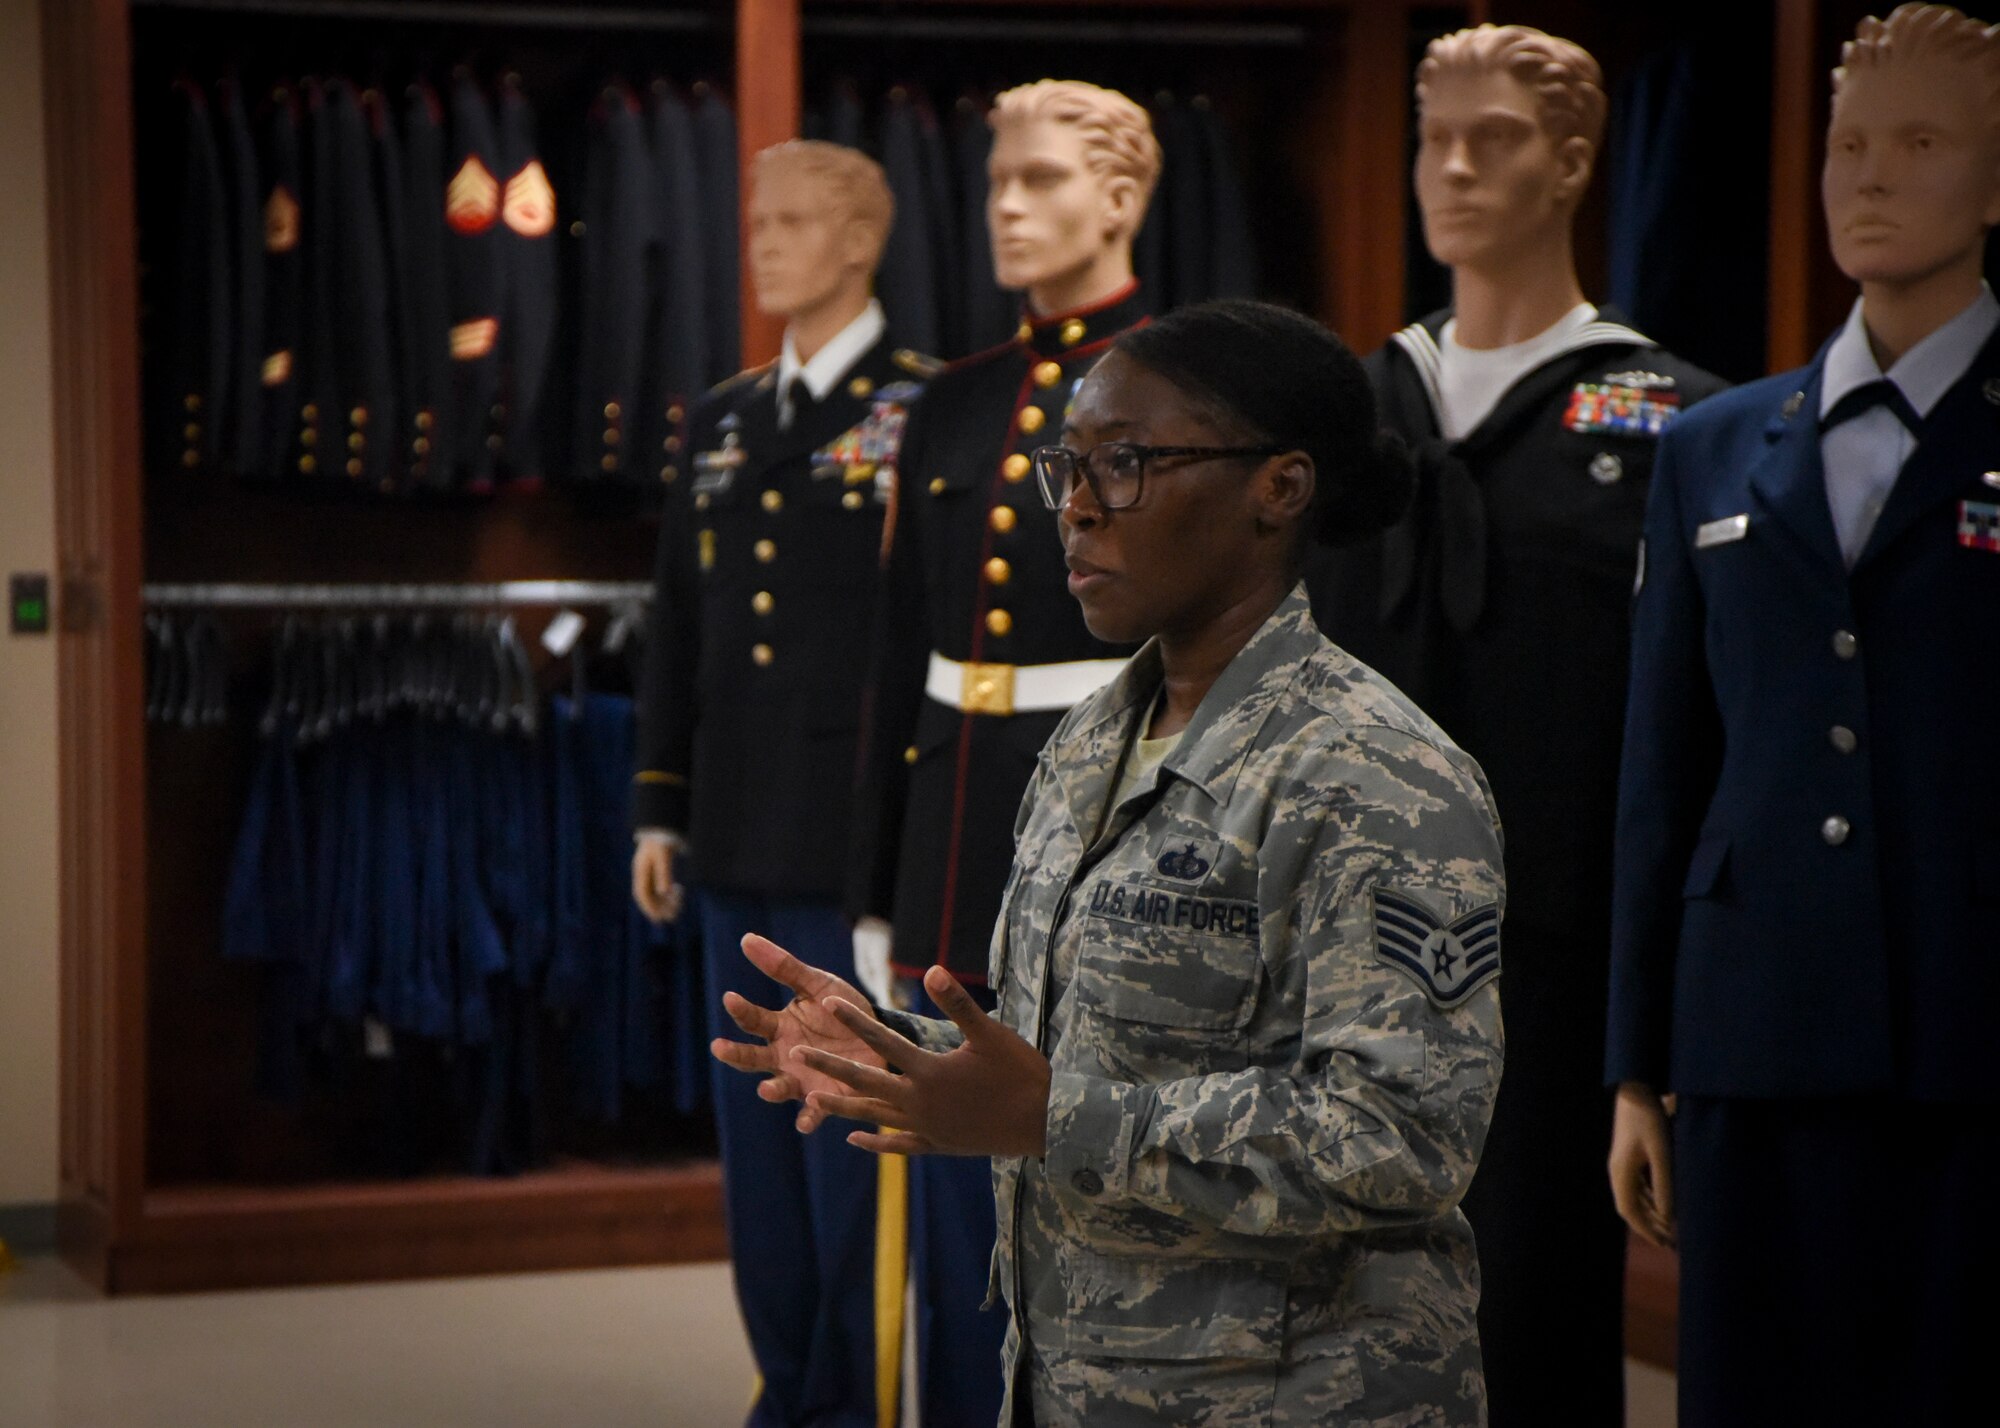 Staff Sgt. Michelle Johnson briefs guests during an orientation.